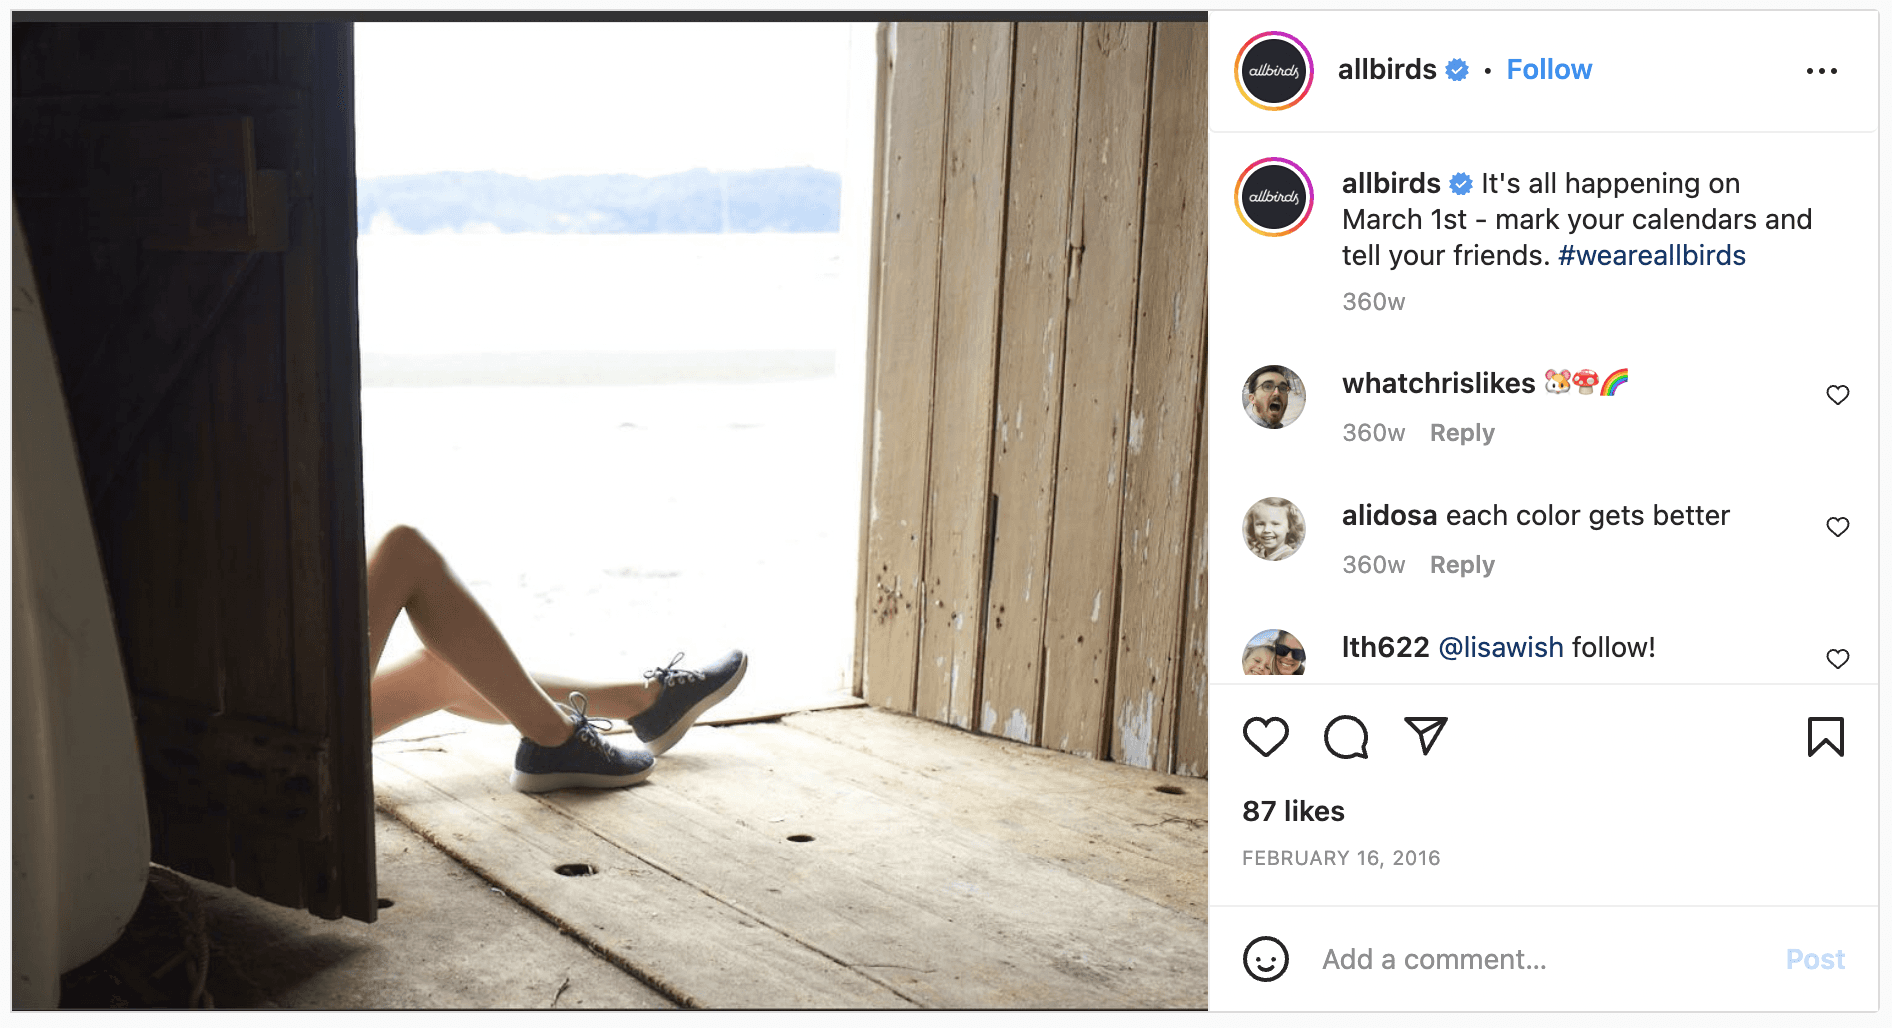 Allbirds product launch instagram teaser